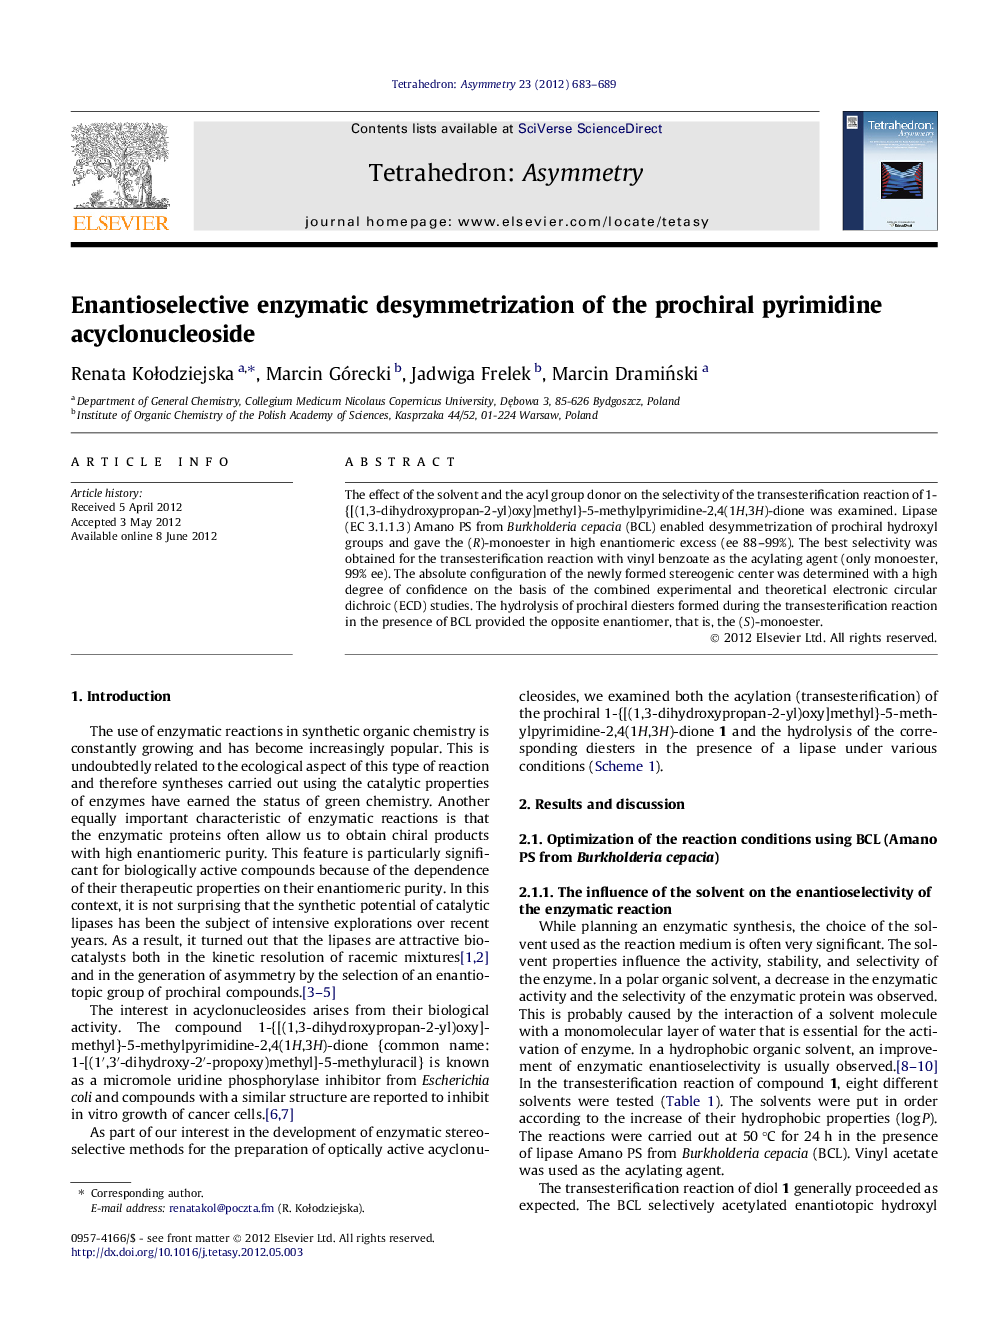 Enantioselective enzymatic desymmetrization of the prochiral pyrimidine acyclonucleoside